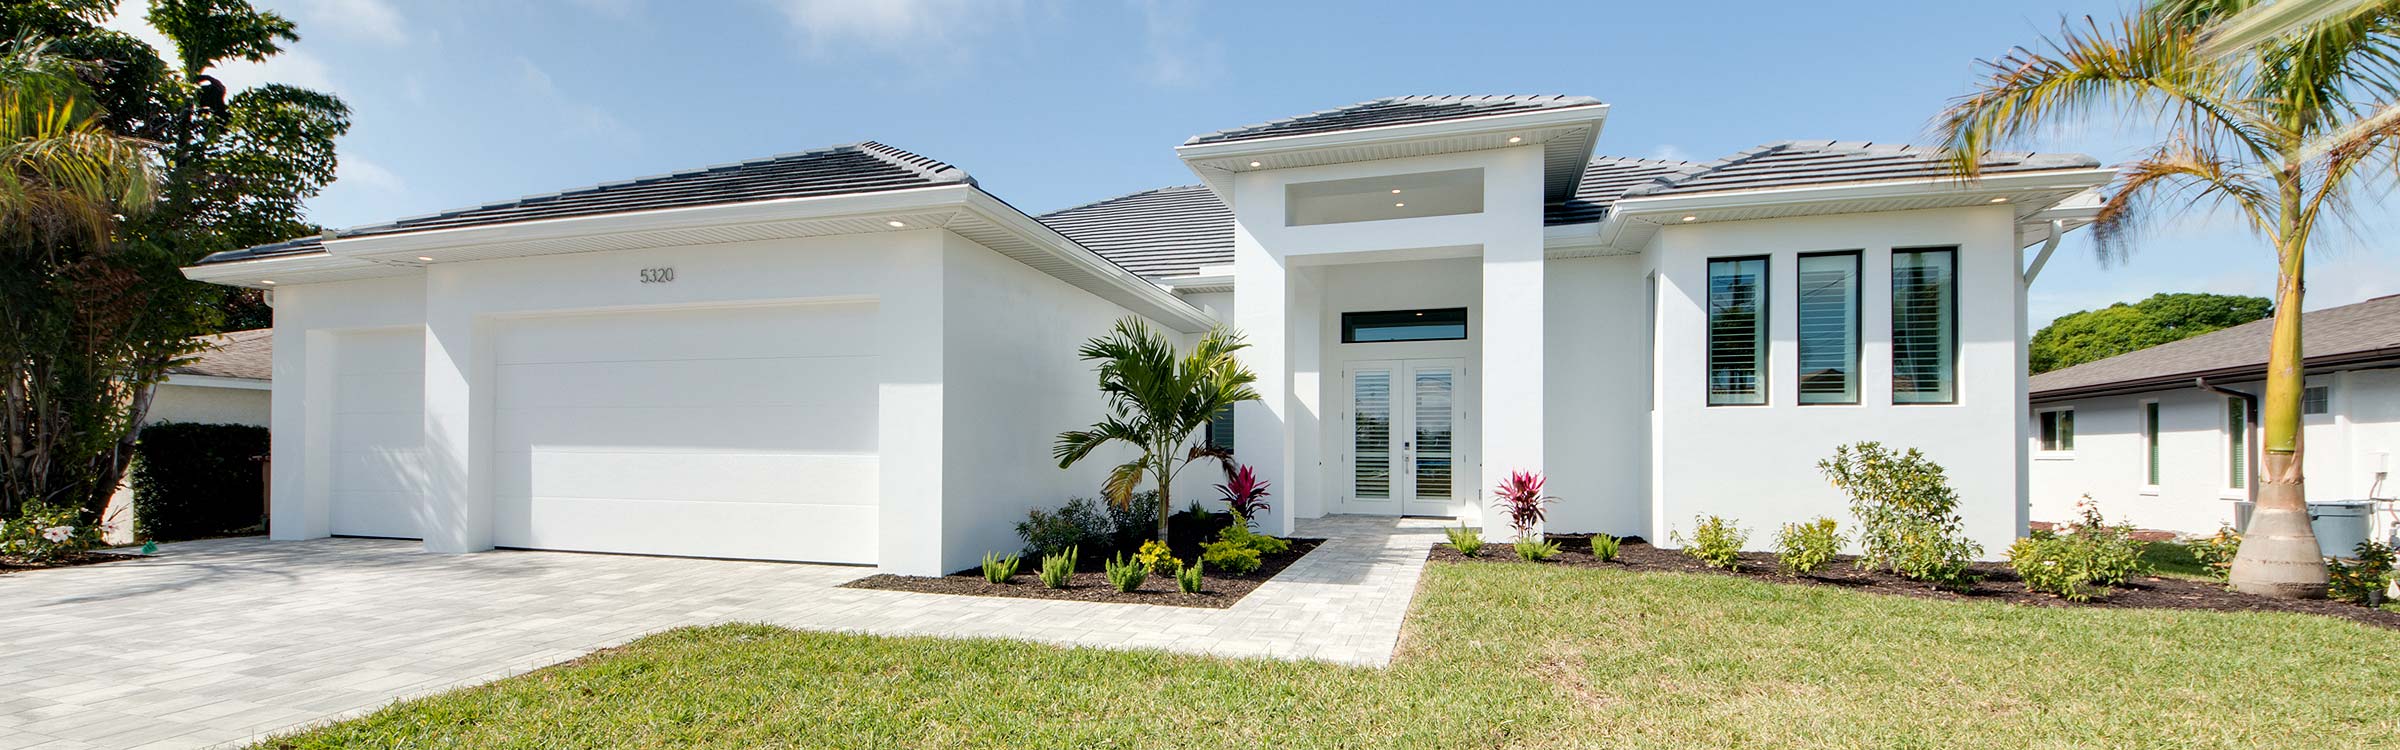 Professionelle Hausverwaltung Ihres Ferienhauses in Florida